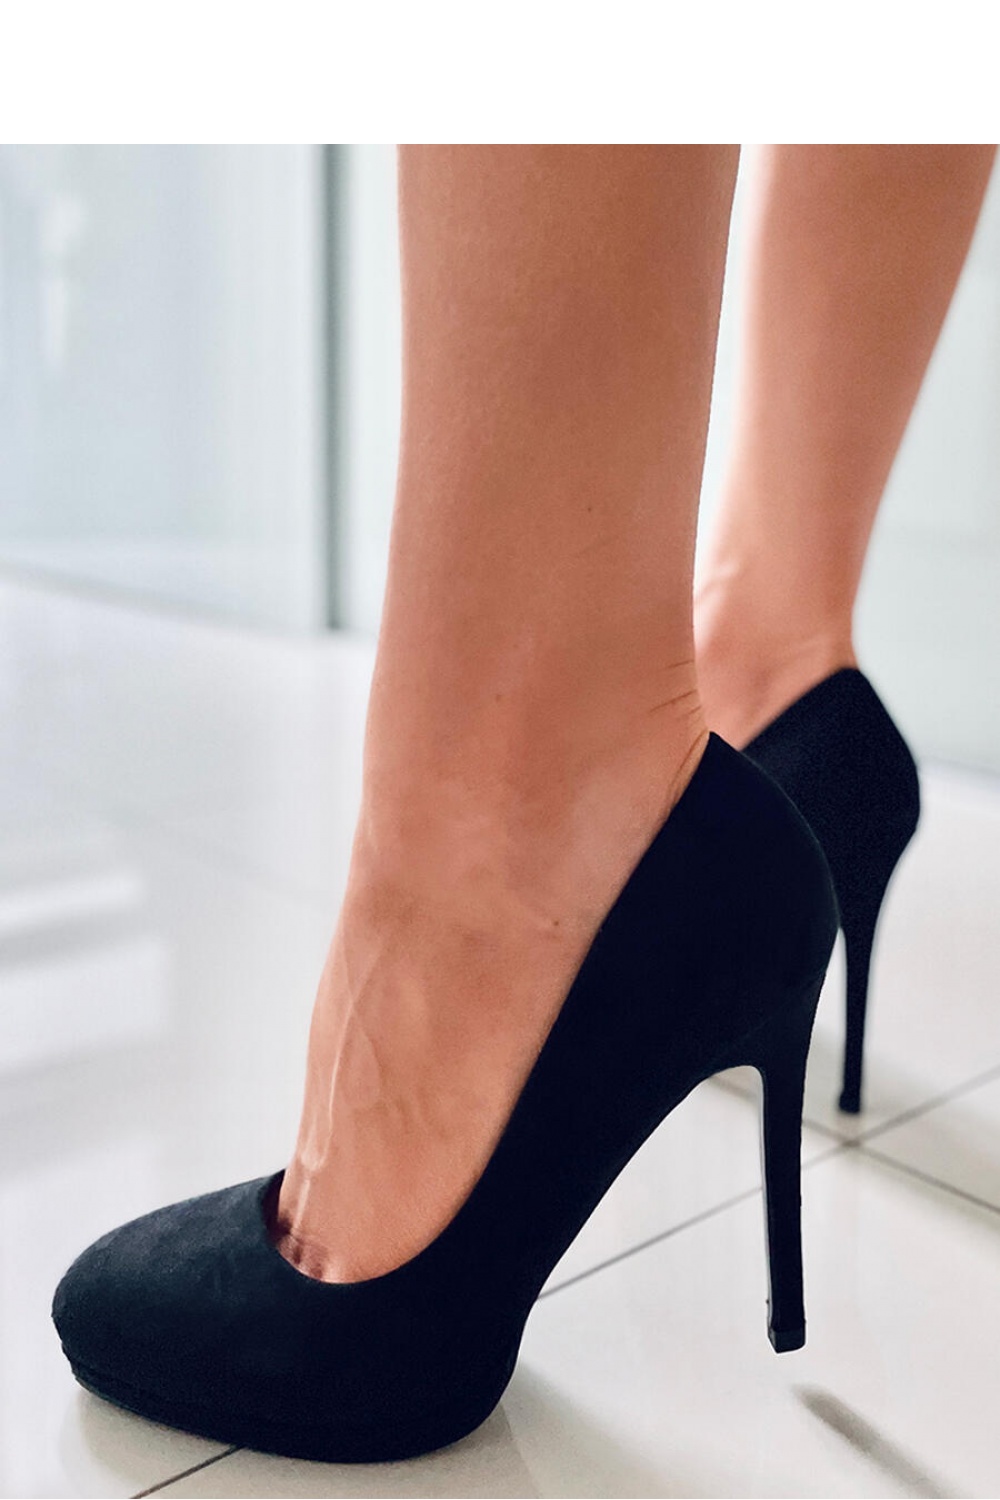  High heels model 174098 Inello  black